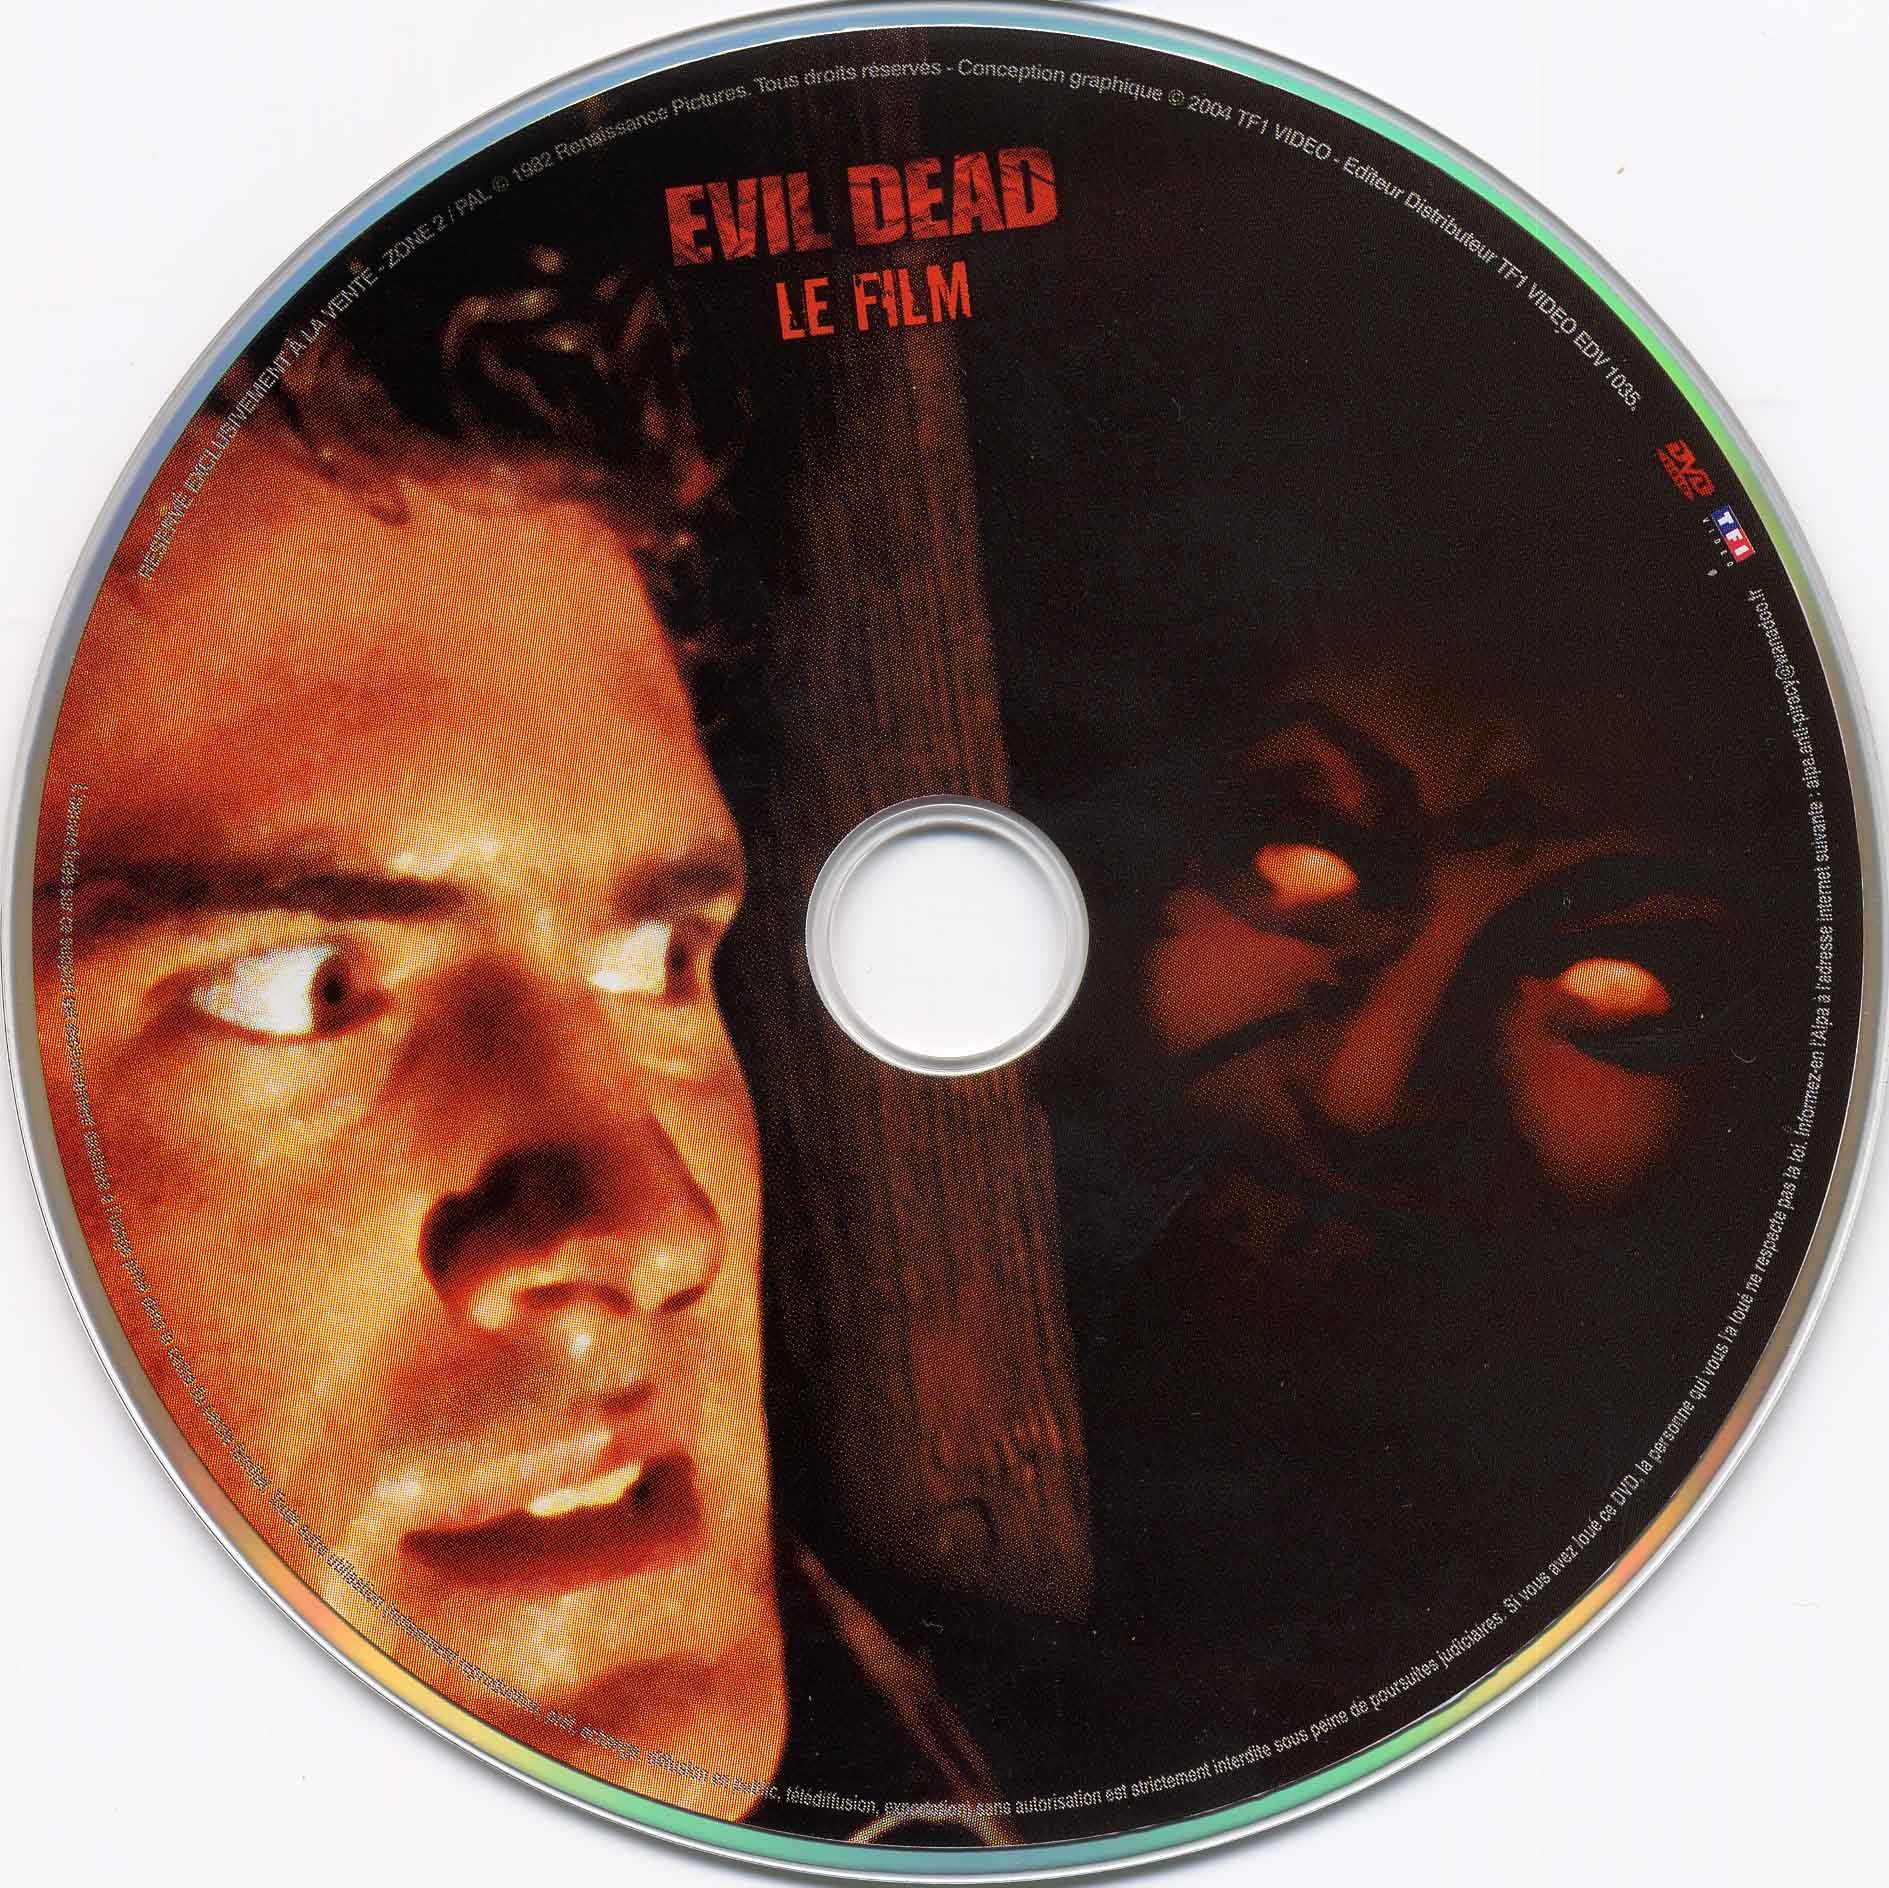 Evil dead DISC 1